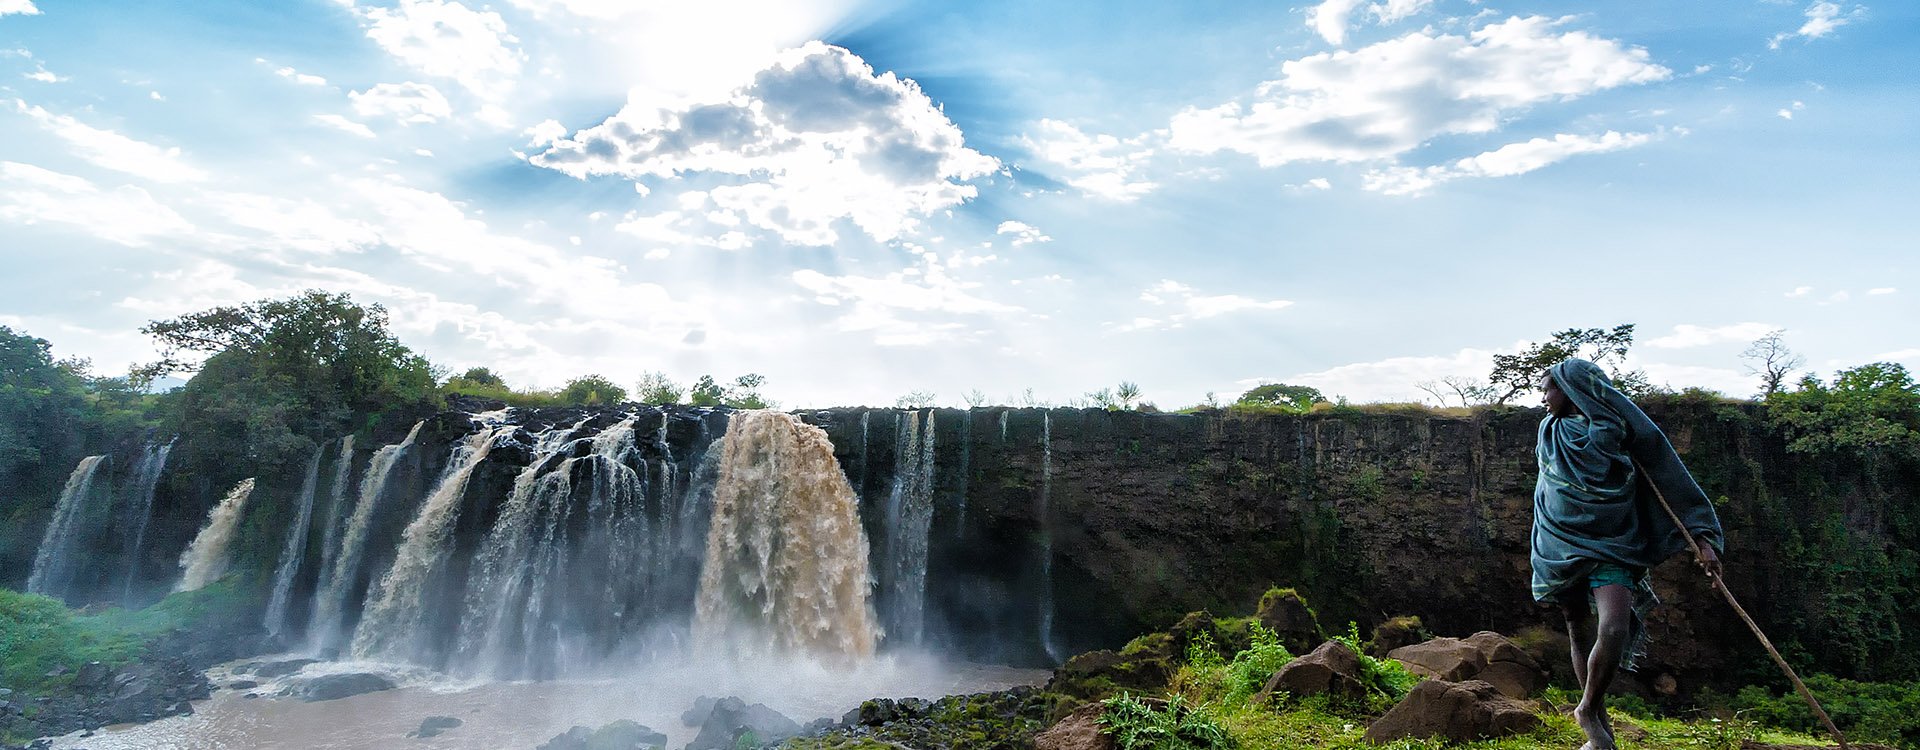 Bahir Dar, Ethiopia: A boy stares at the Blue Nile Waterfalls.